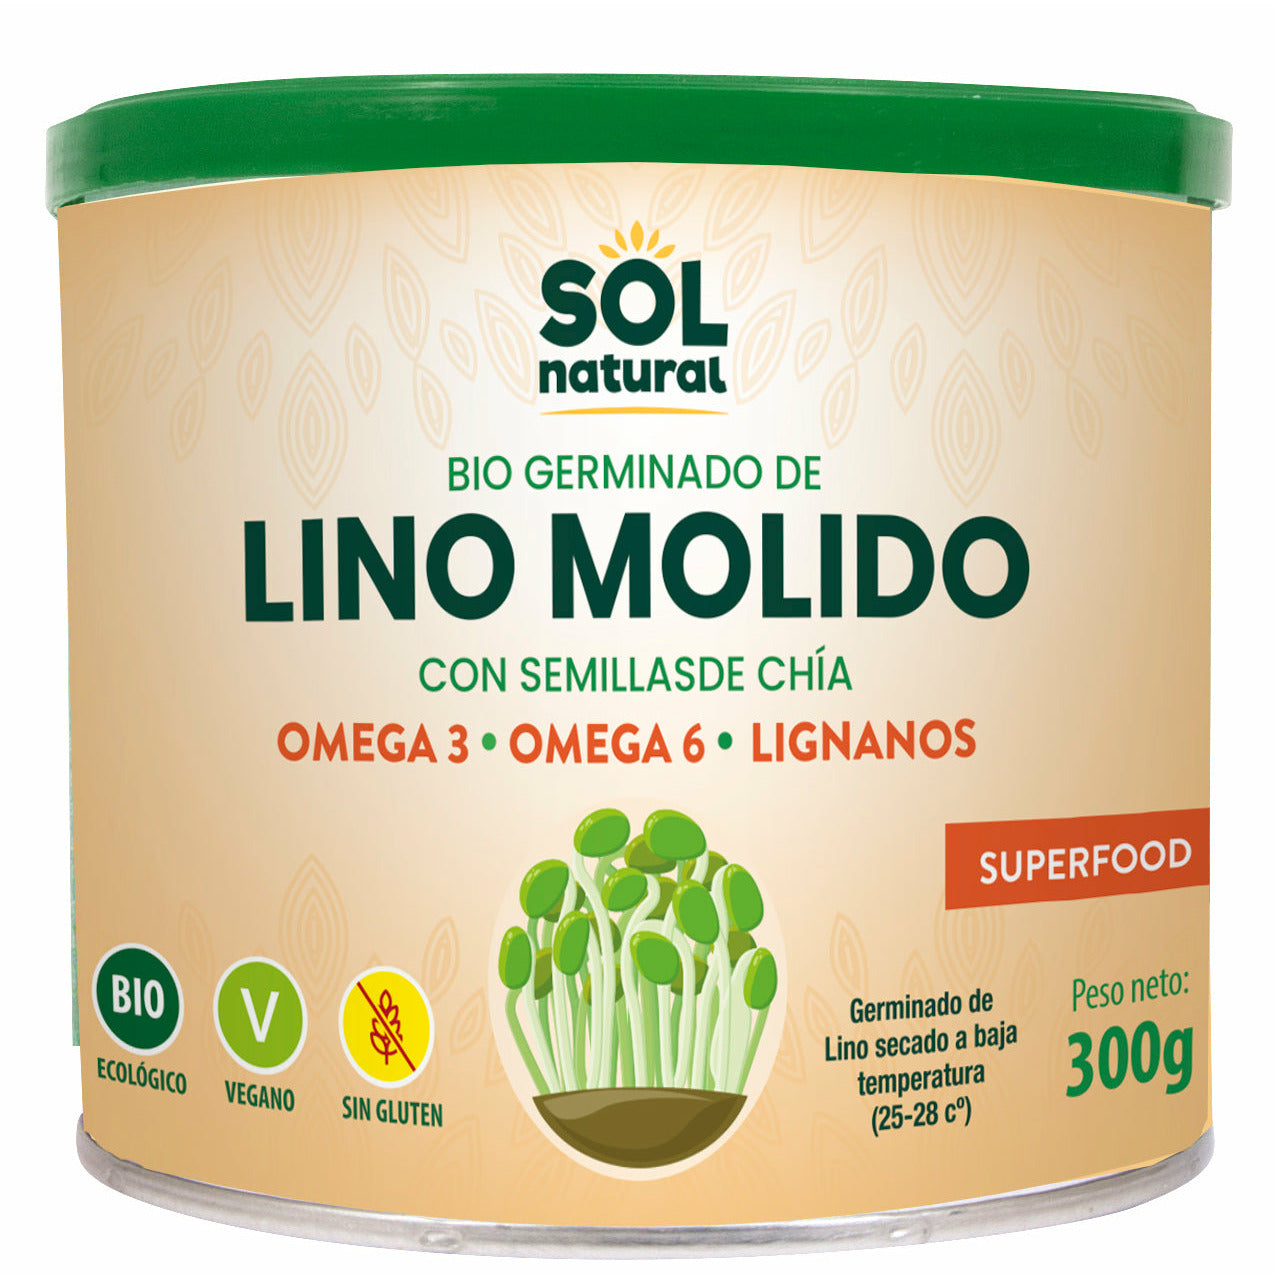 Germinado de Lino Molido Con Chia Bio 300 gr | Sol Natural - Dietetica Ferrer